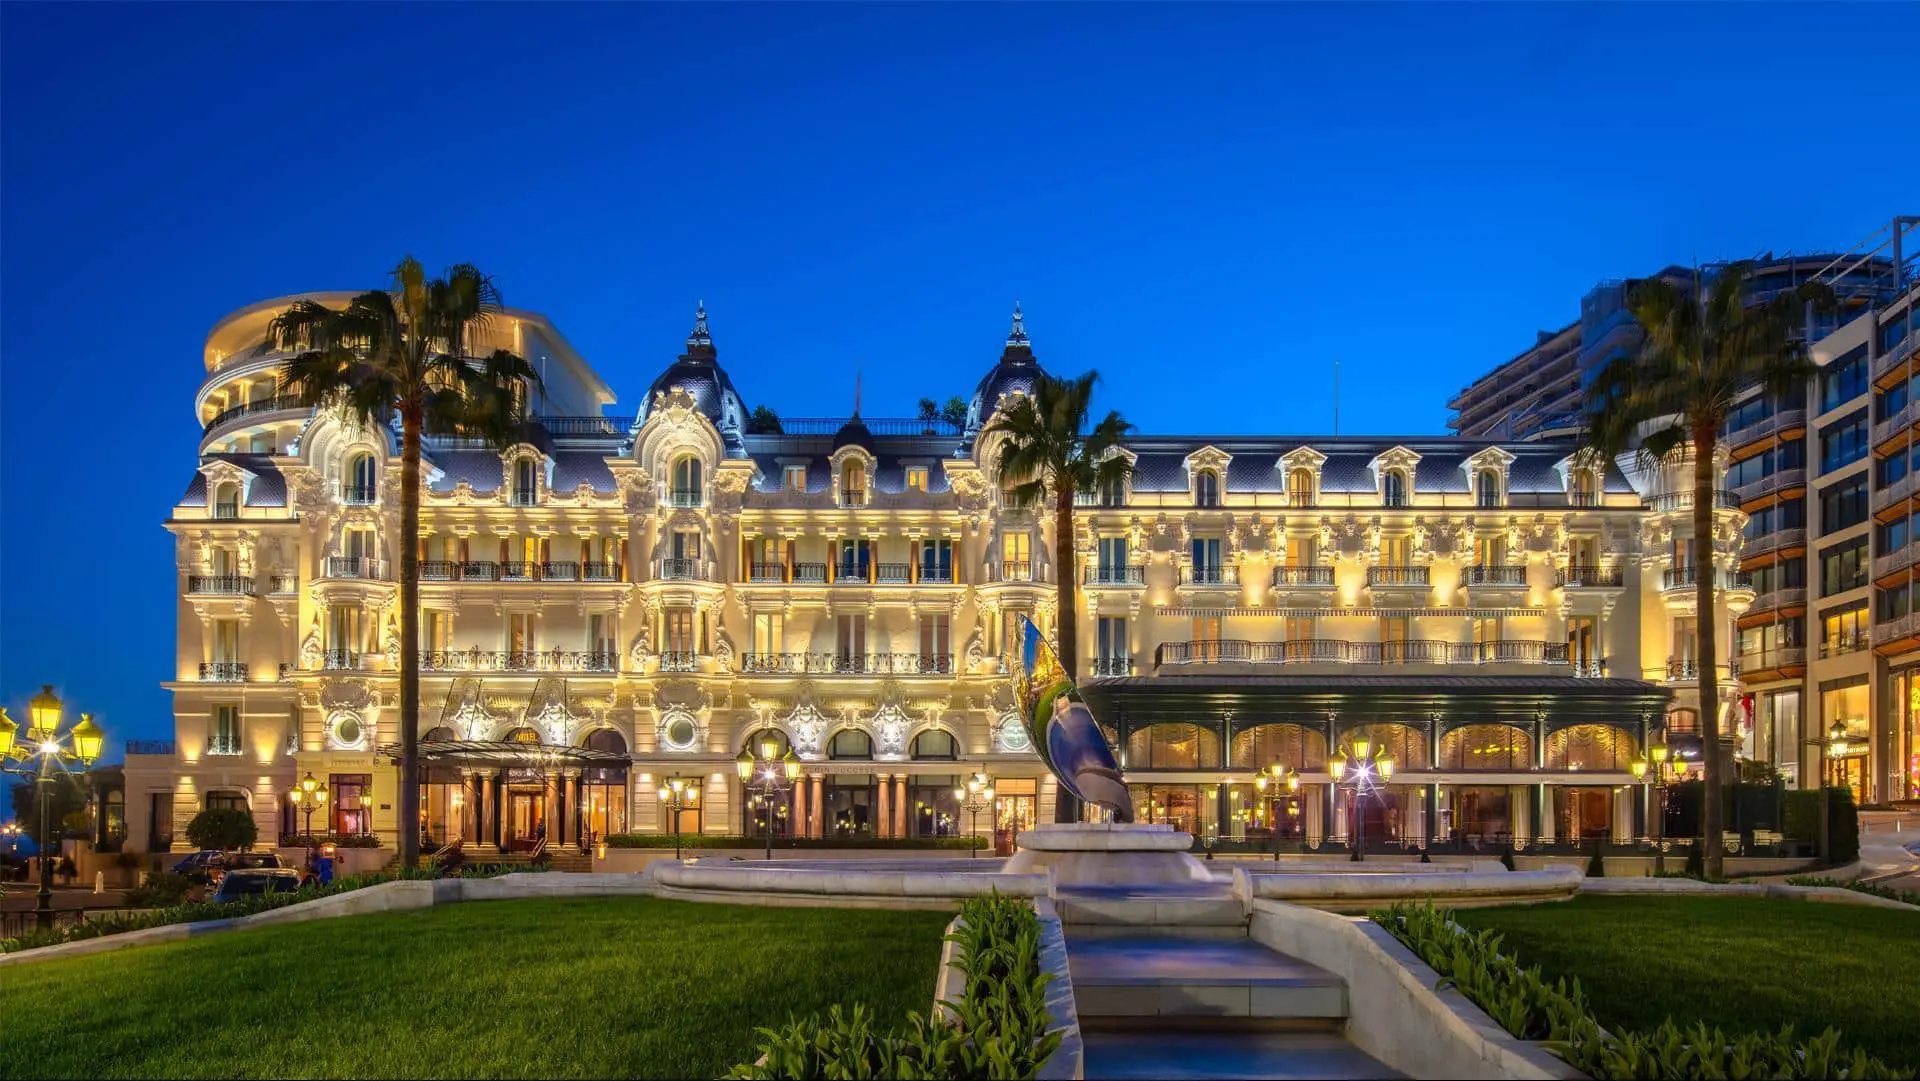 Imgage the Hotel de Paris Monte-Carlo during the evening, l